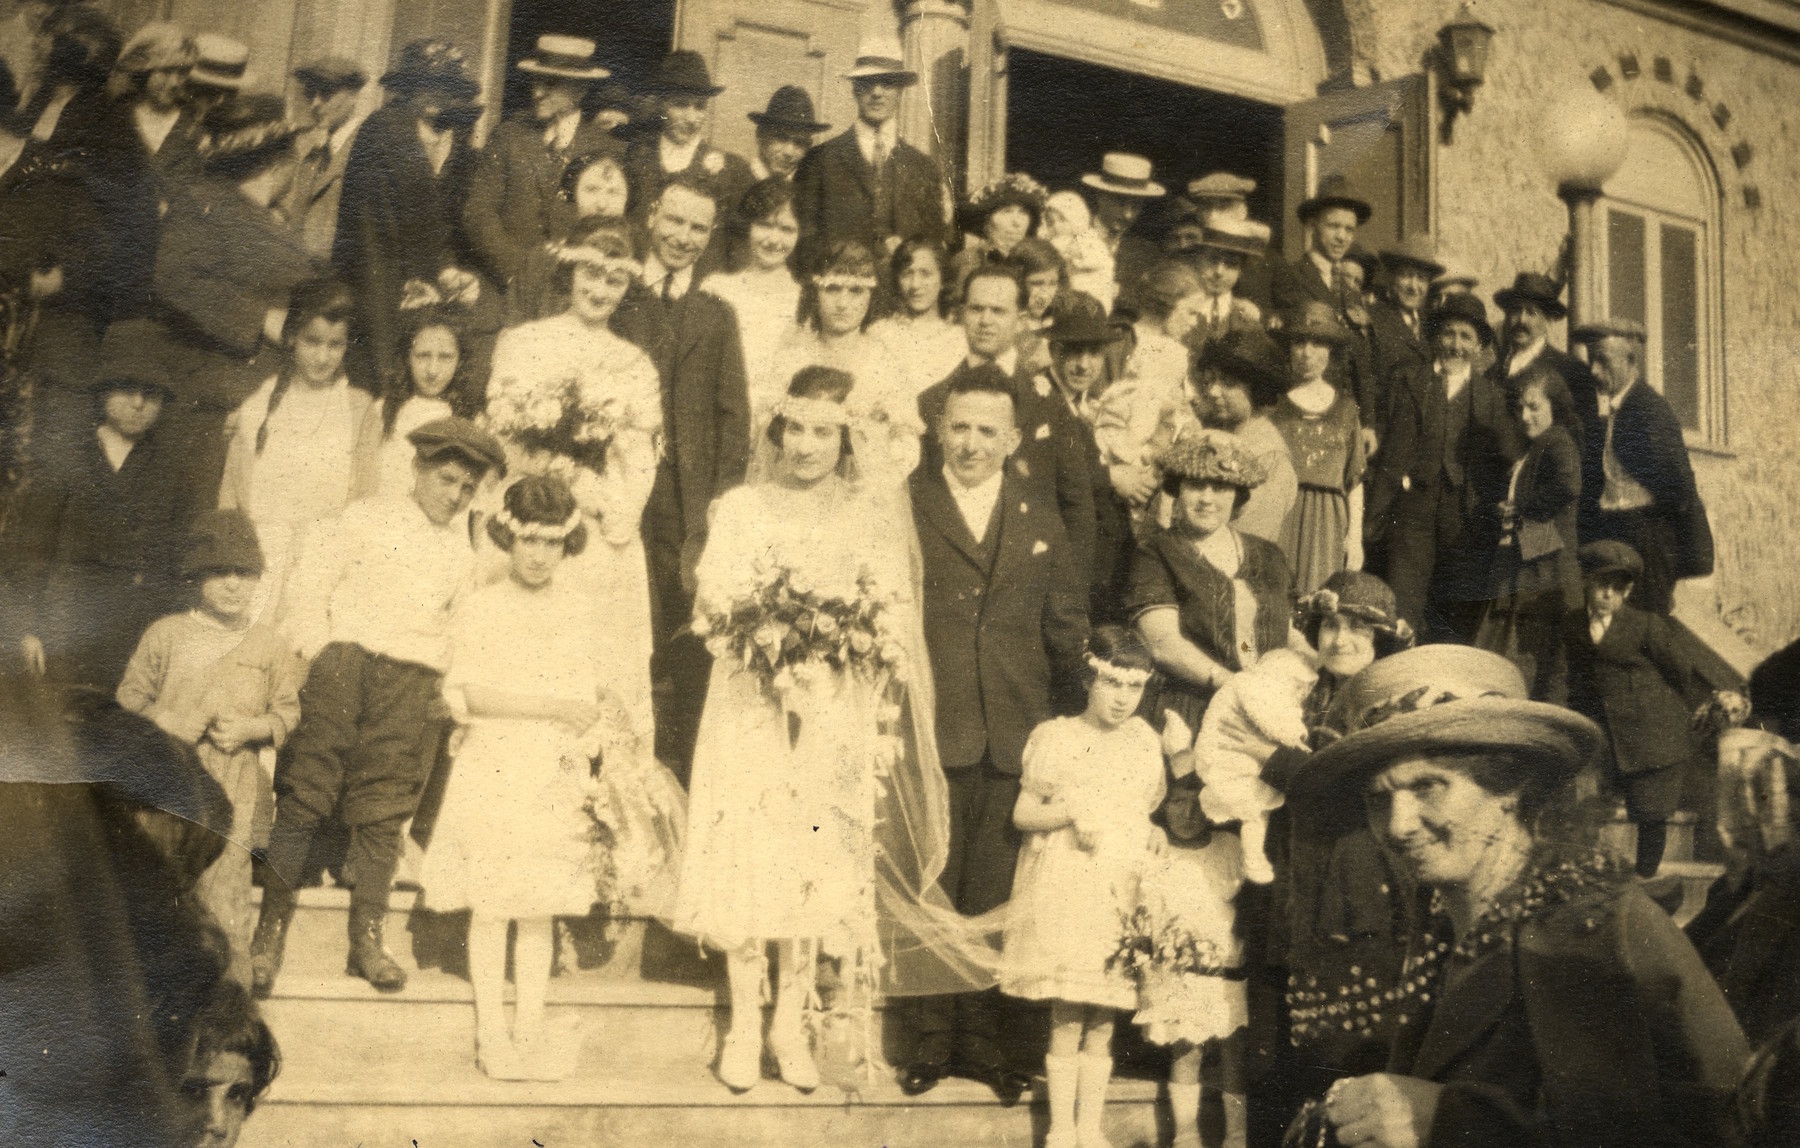 Joseph Benbeniste and Margaret Albohaire wedding photograph at Congregation Ezra Bessaroth, 15th Ave. and E. Fir Street, Seattle, WA